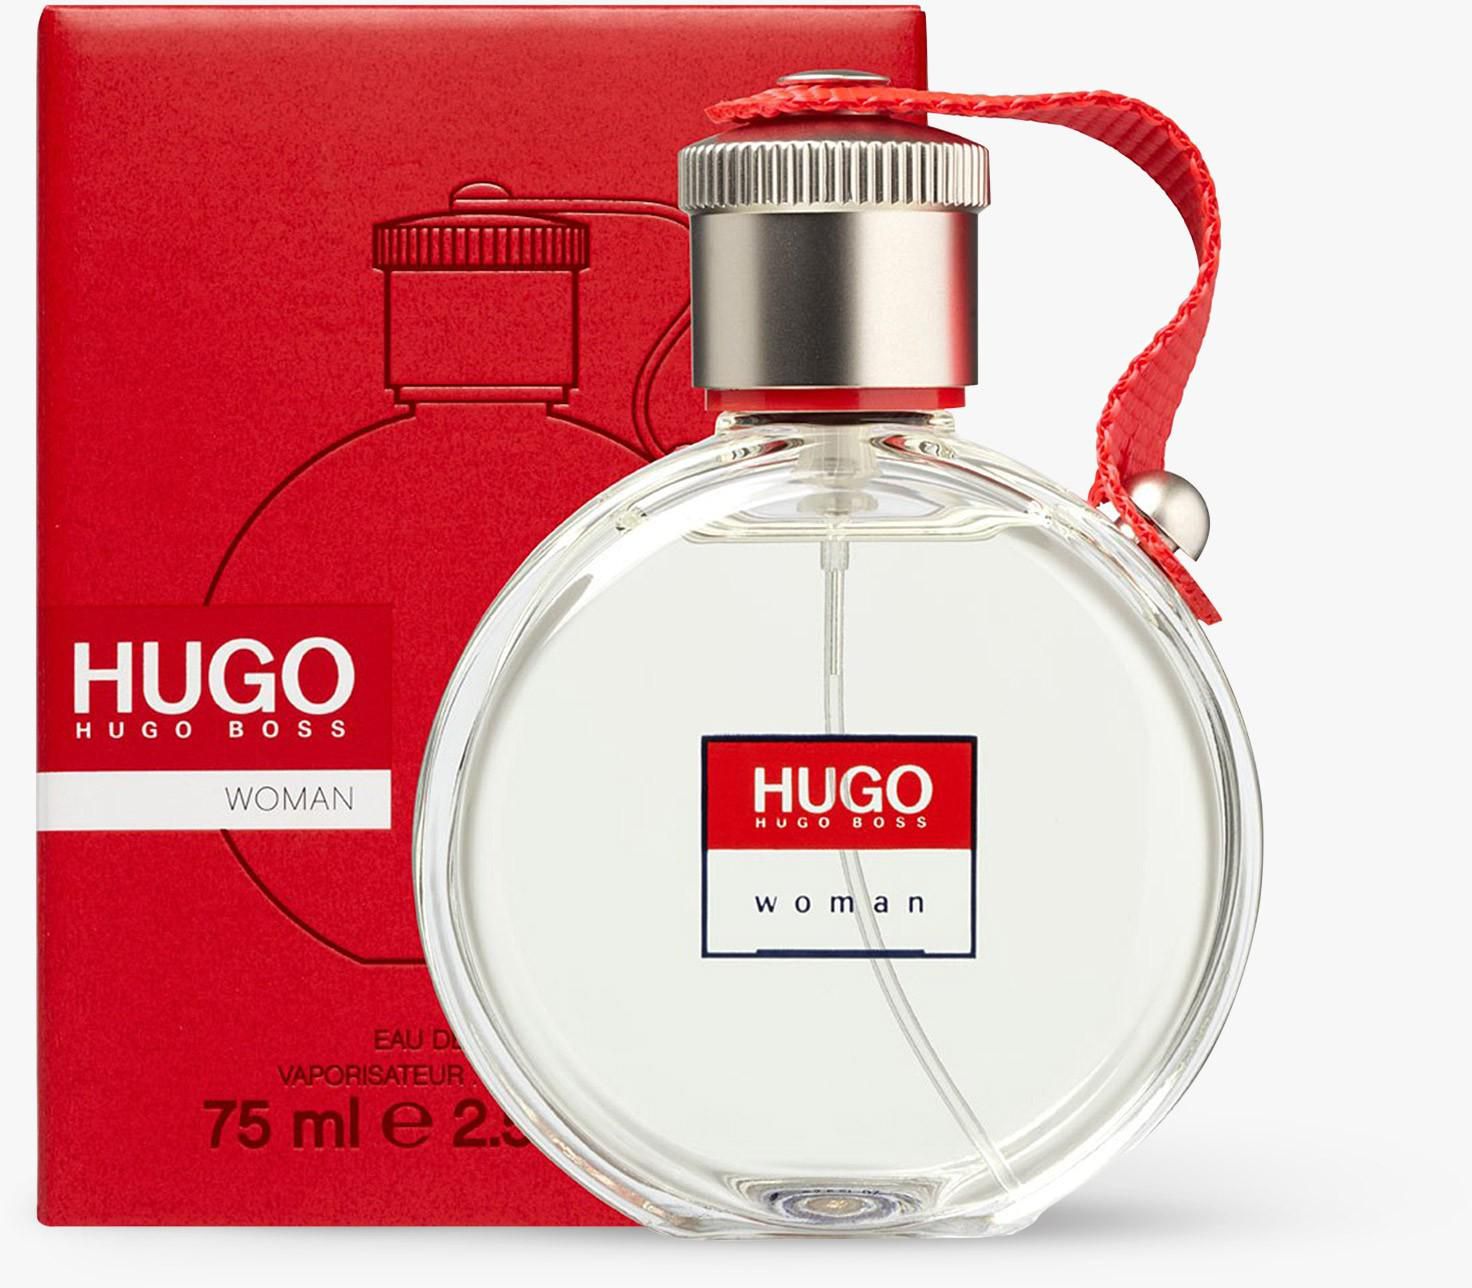 Хуга босс. Hugo Boss woman 50 ml. Hugo Boss Hugo woman 75 мл. Hugo Boss Hugo woman EDP (50 мл). Boss Hugo woman 50ml EDP красный.